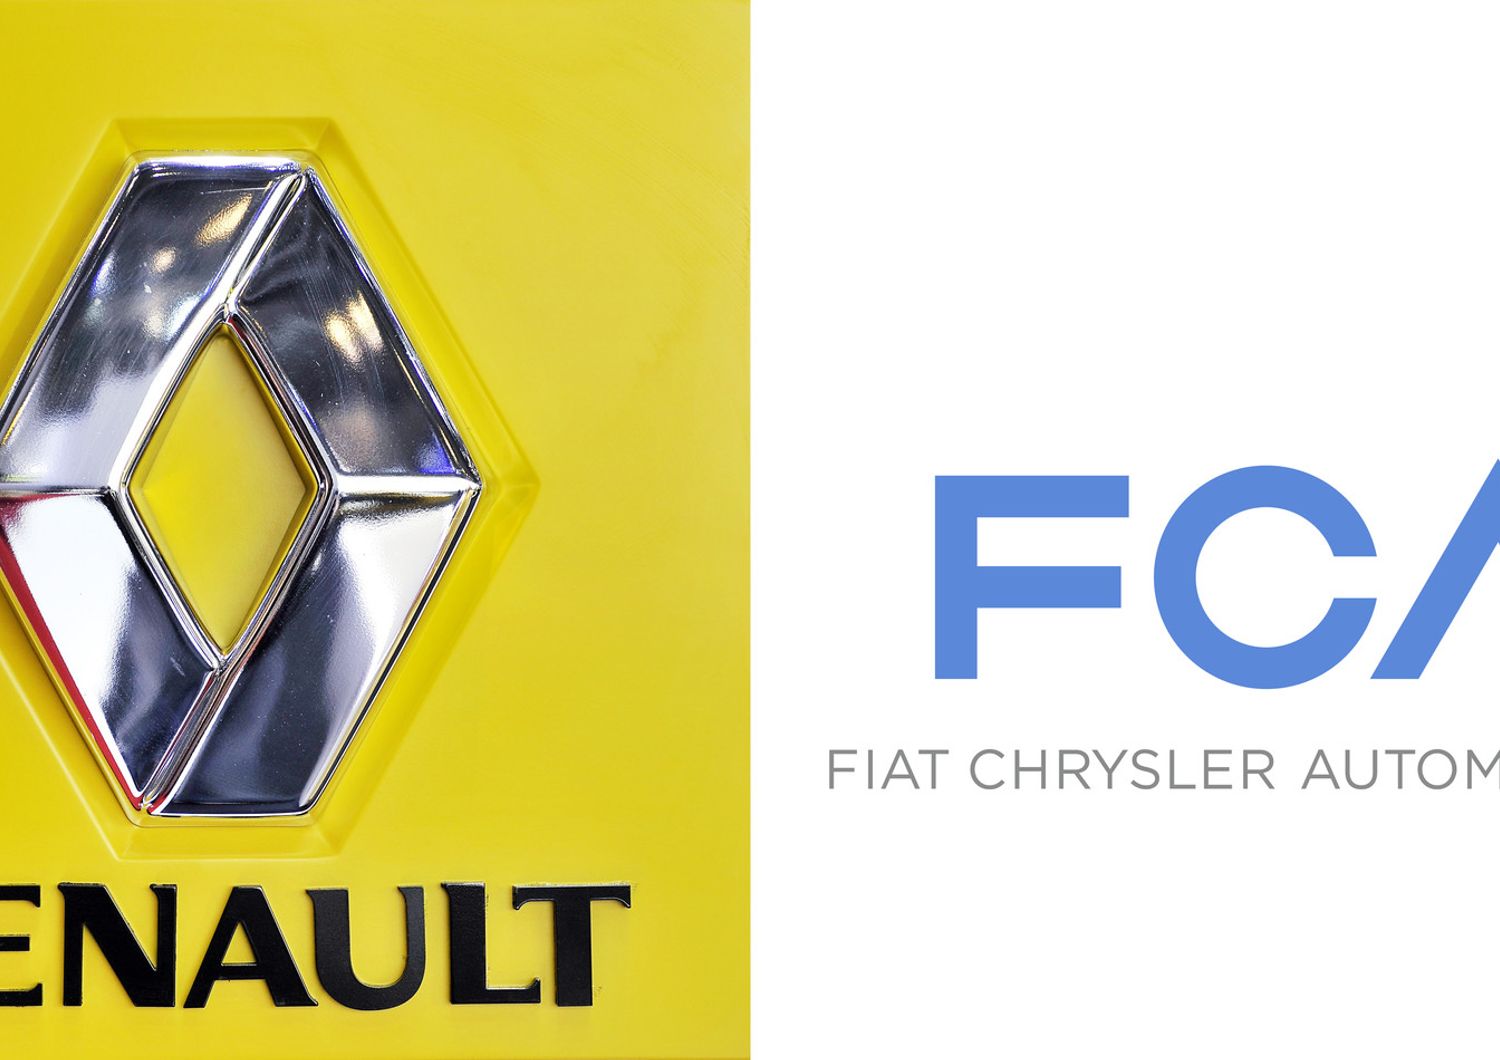 Renault-Fca